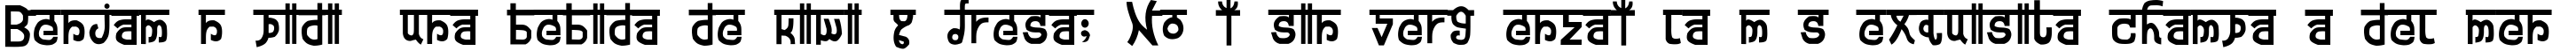 Пример написания шрифтом Devanagarish текста на испанском